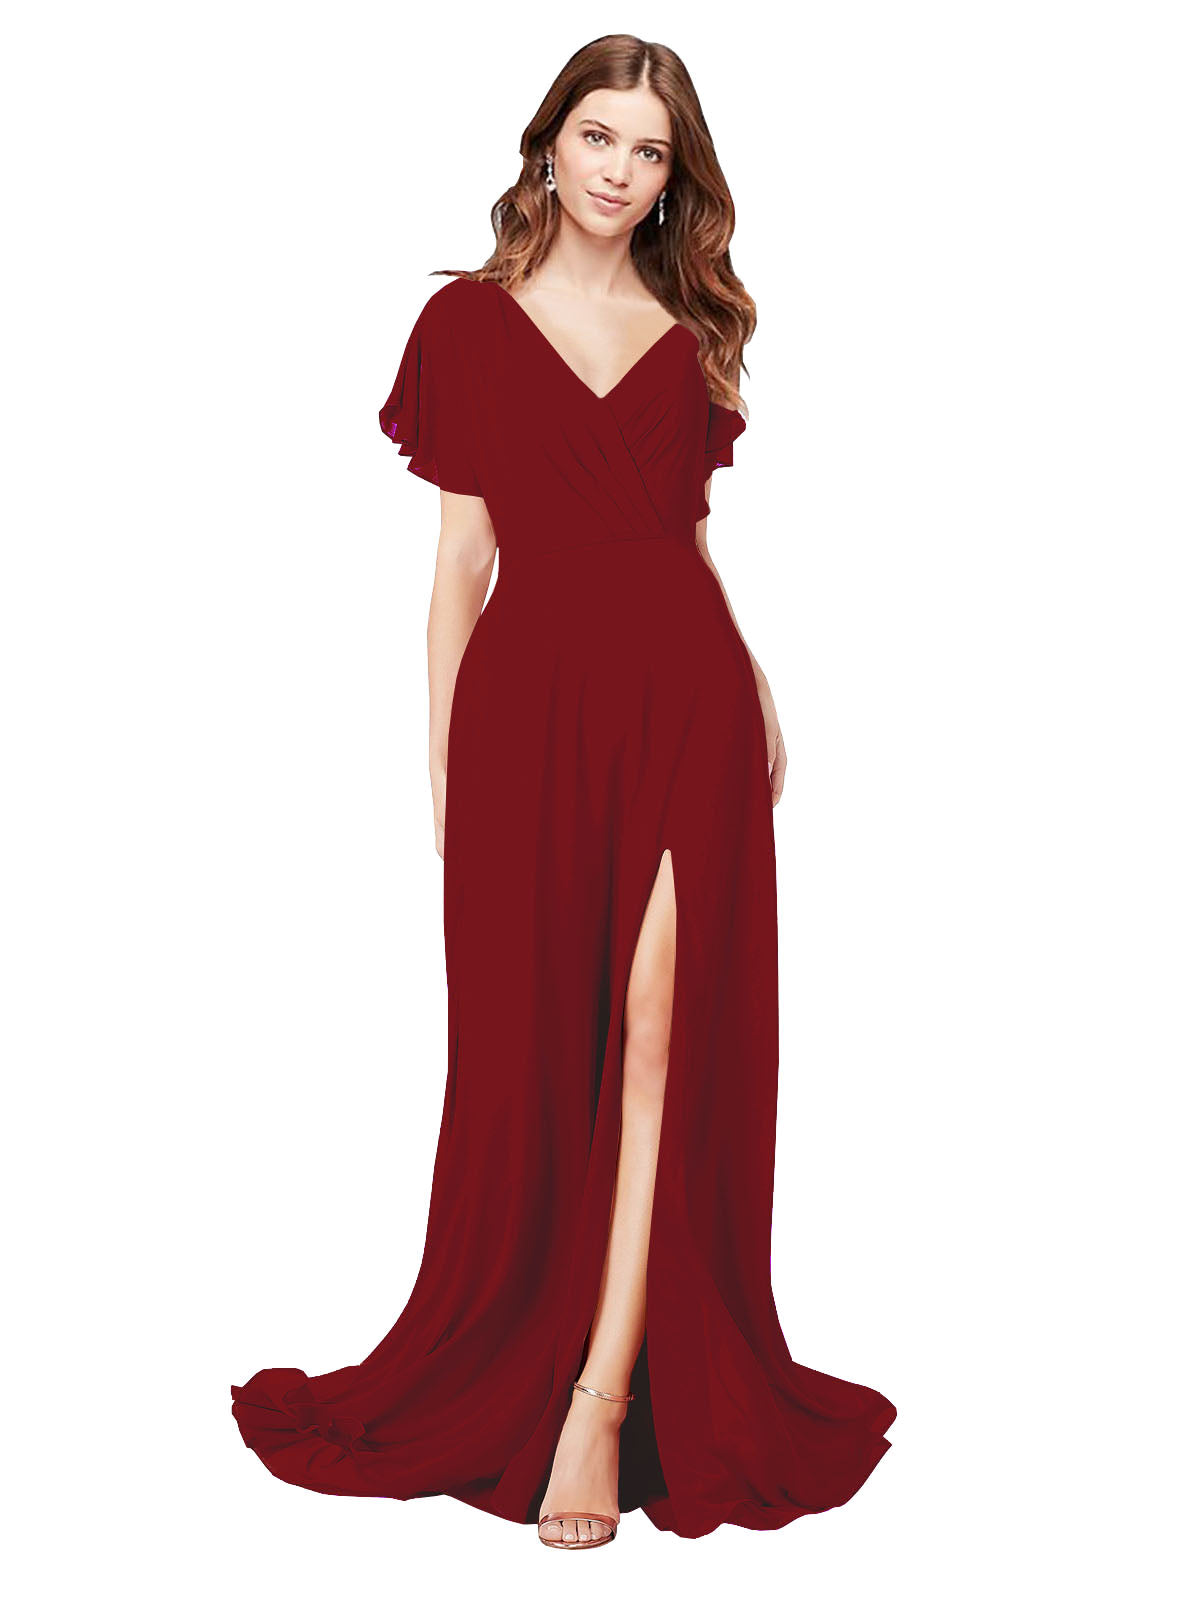 RightBrides Marisol Burgundy A-Line V-Neck Cap Sleeves Long Bridesmaid Dress